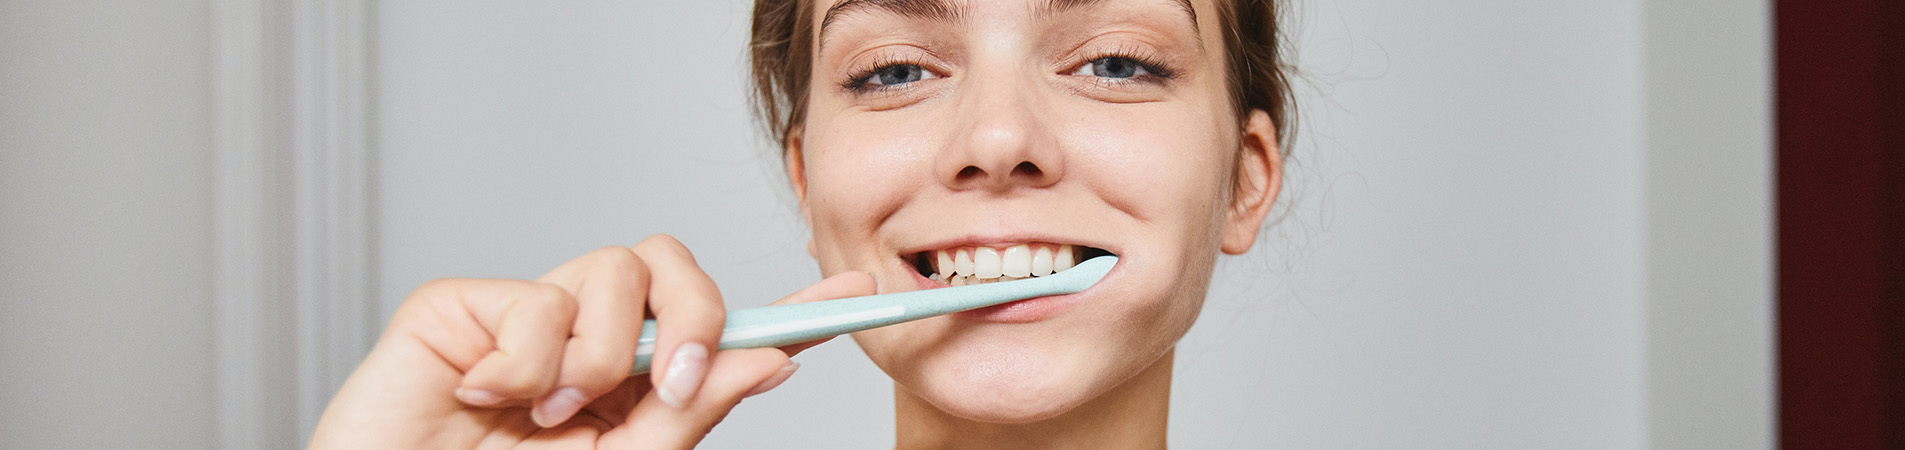 Girl brushing her teeth thinking of dental care insurance